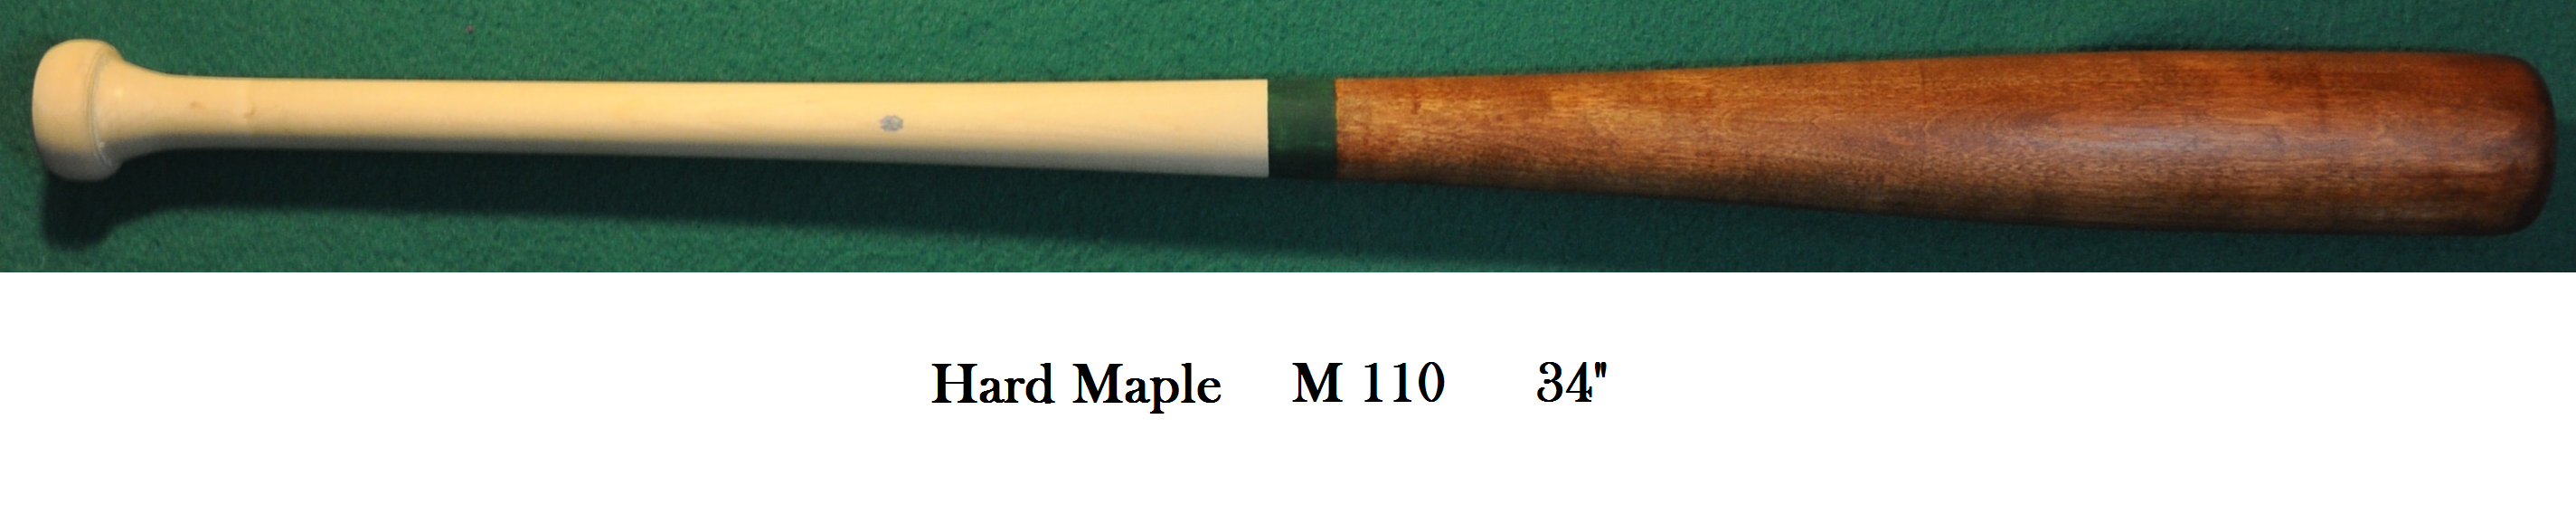 M 110 Hard Maple